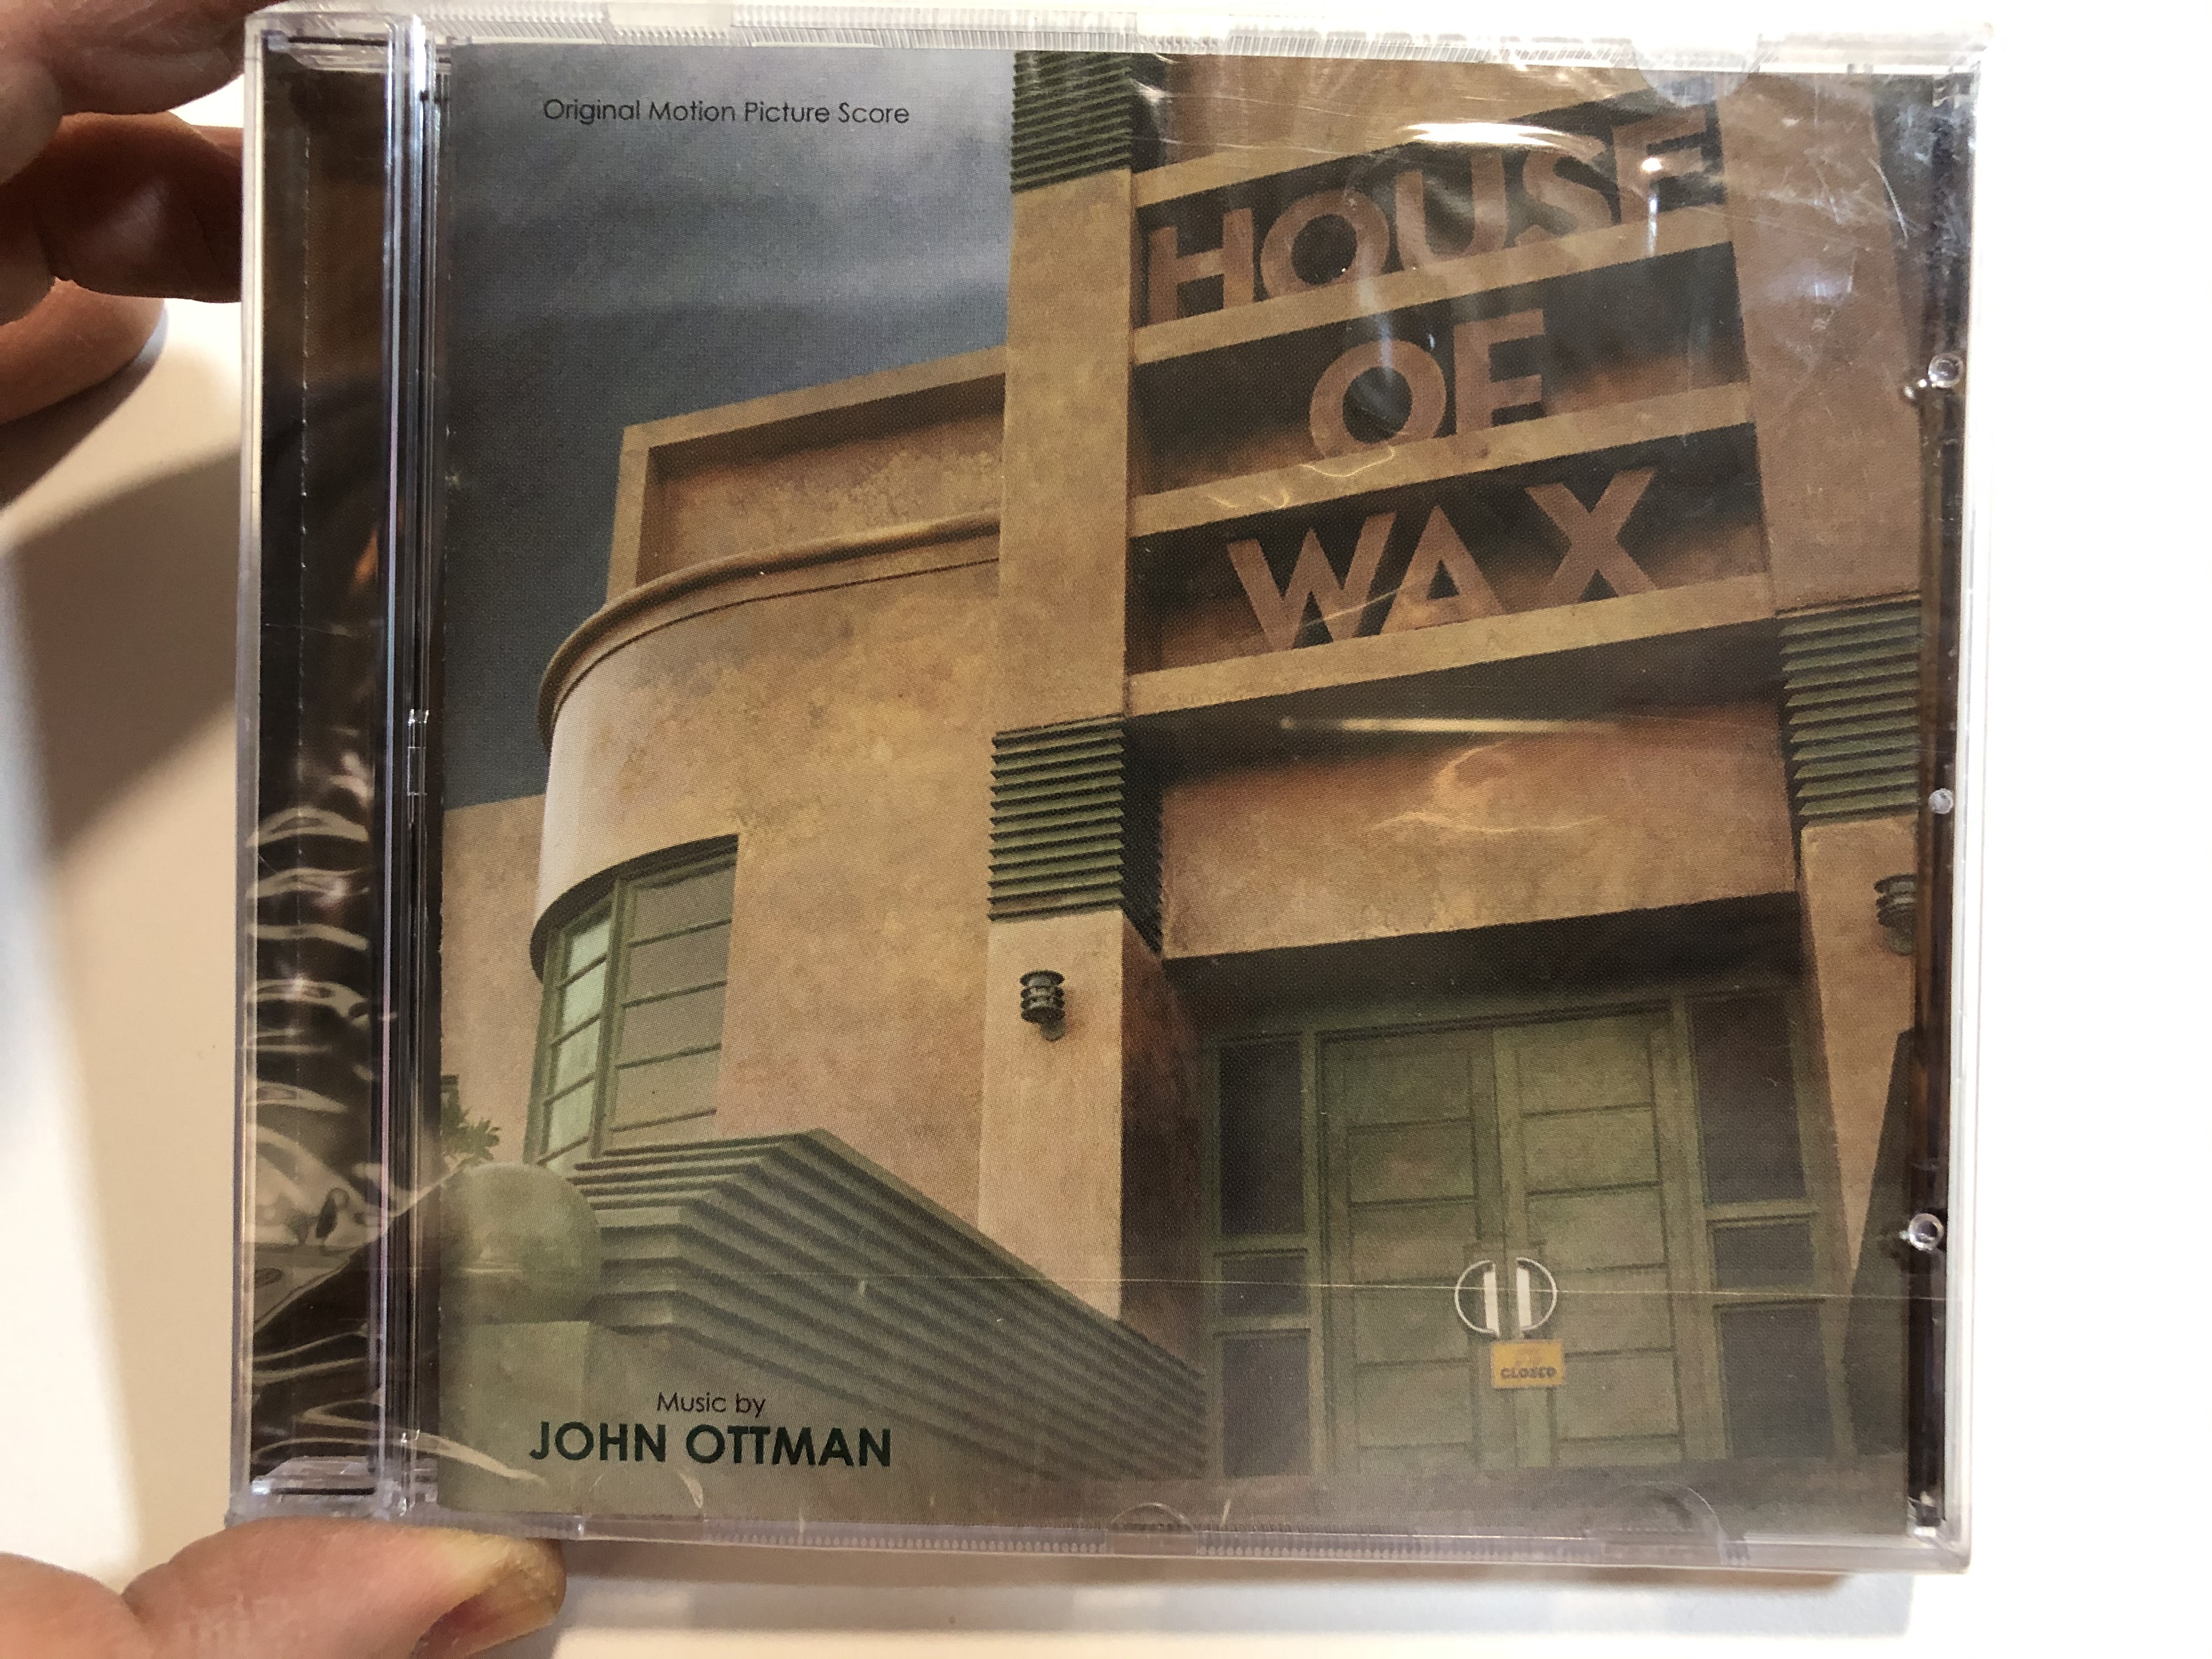 house-of-wax-music-by-john-ottman-original-motion-picture-score-var-se-sarabande-audio-cd-2005-vsd-6652-1-.jpg